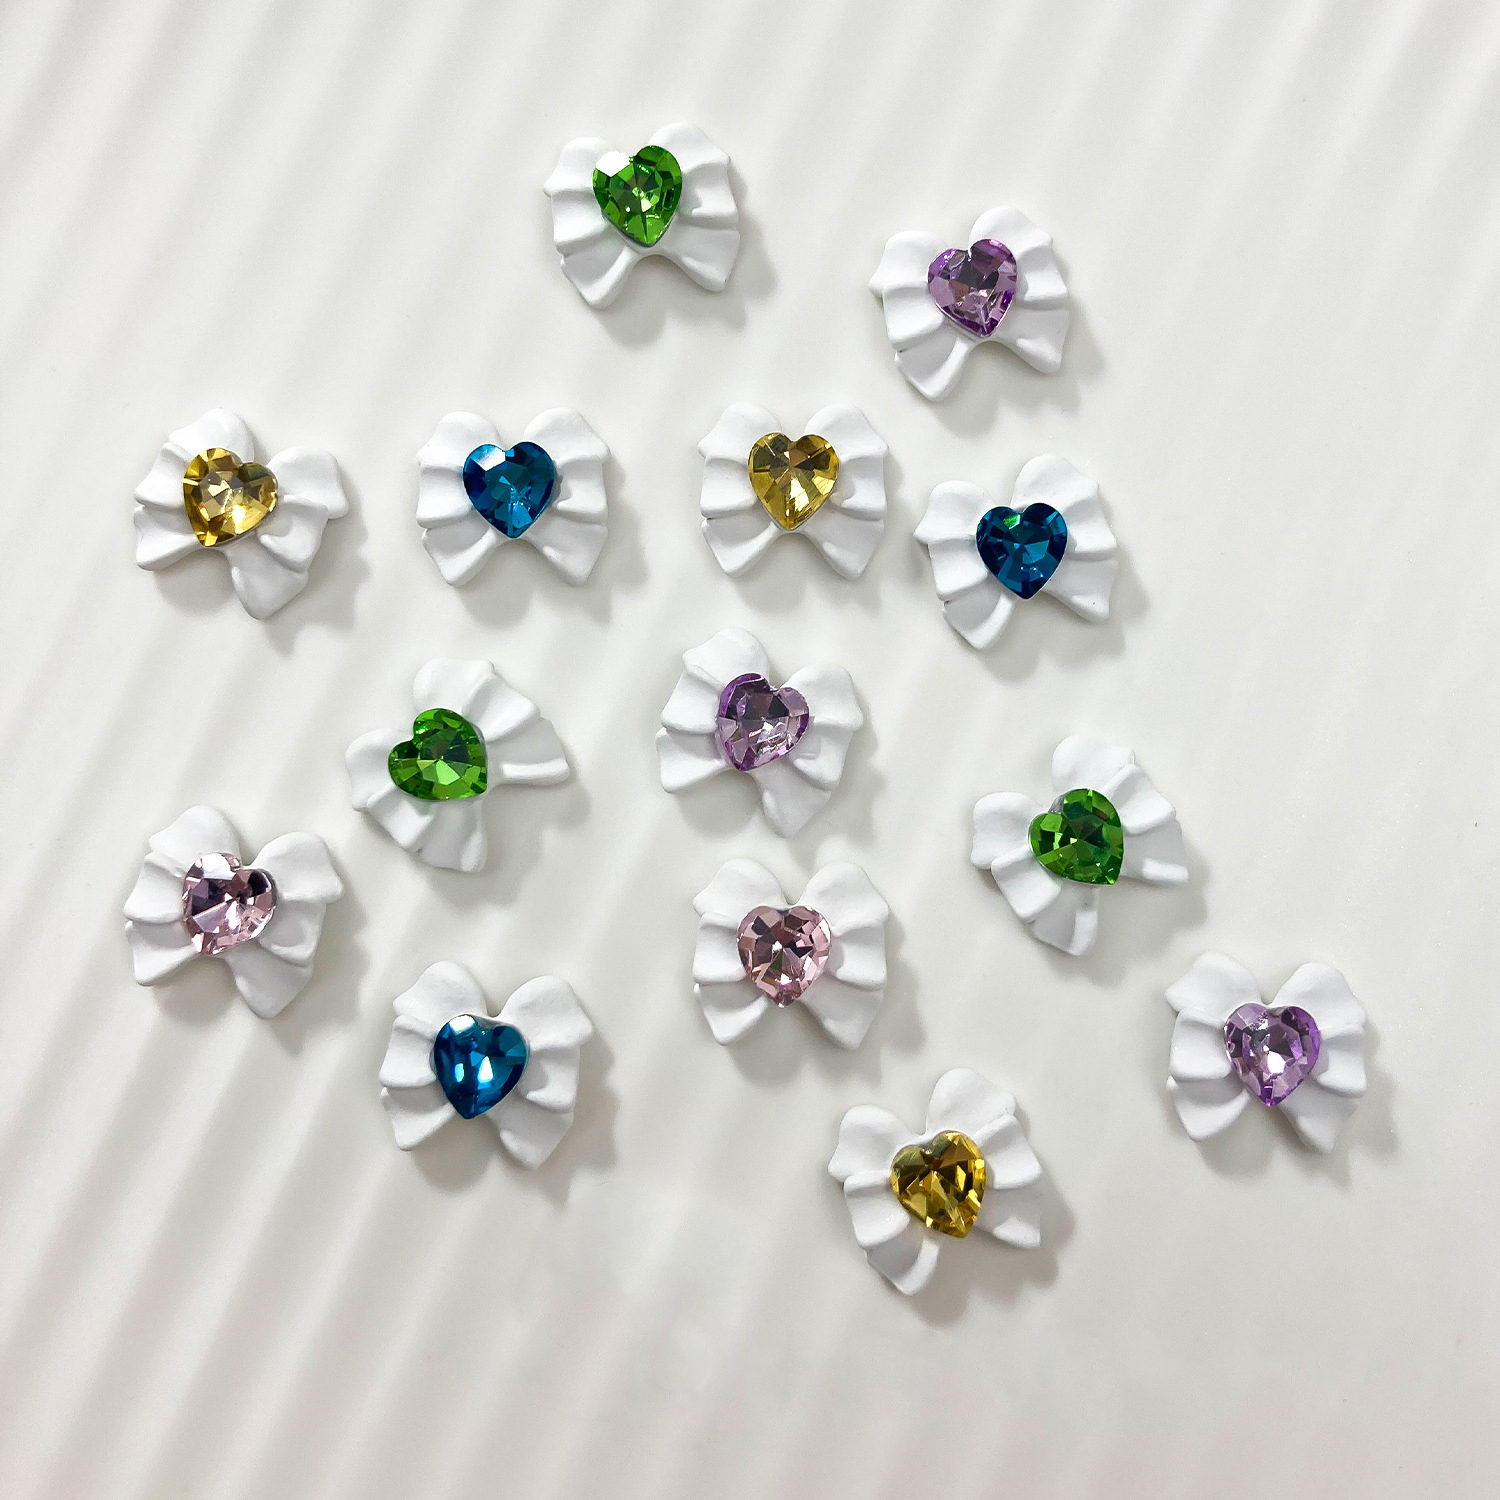 Juome Nail Charms, 1900 Pcs Kawaii Nail Charms Pearls 3D Resin Butterfly  Bow Clock Shape Charms for Nails Gems, Nail Art Decorations Supplies 